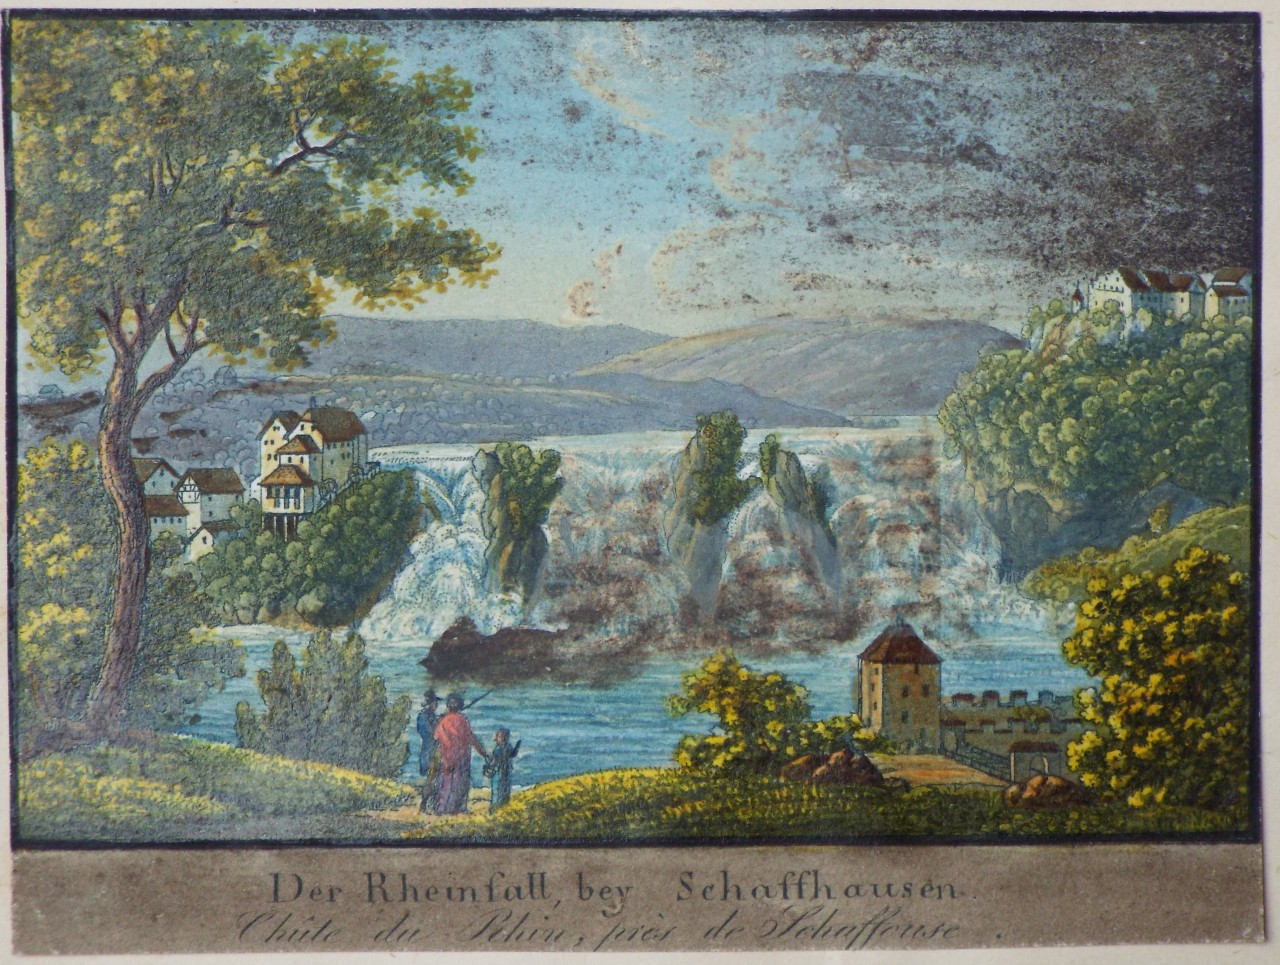 Aquatint - Der Rheinfall bey Schaffhausen.